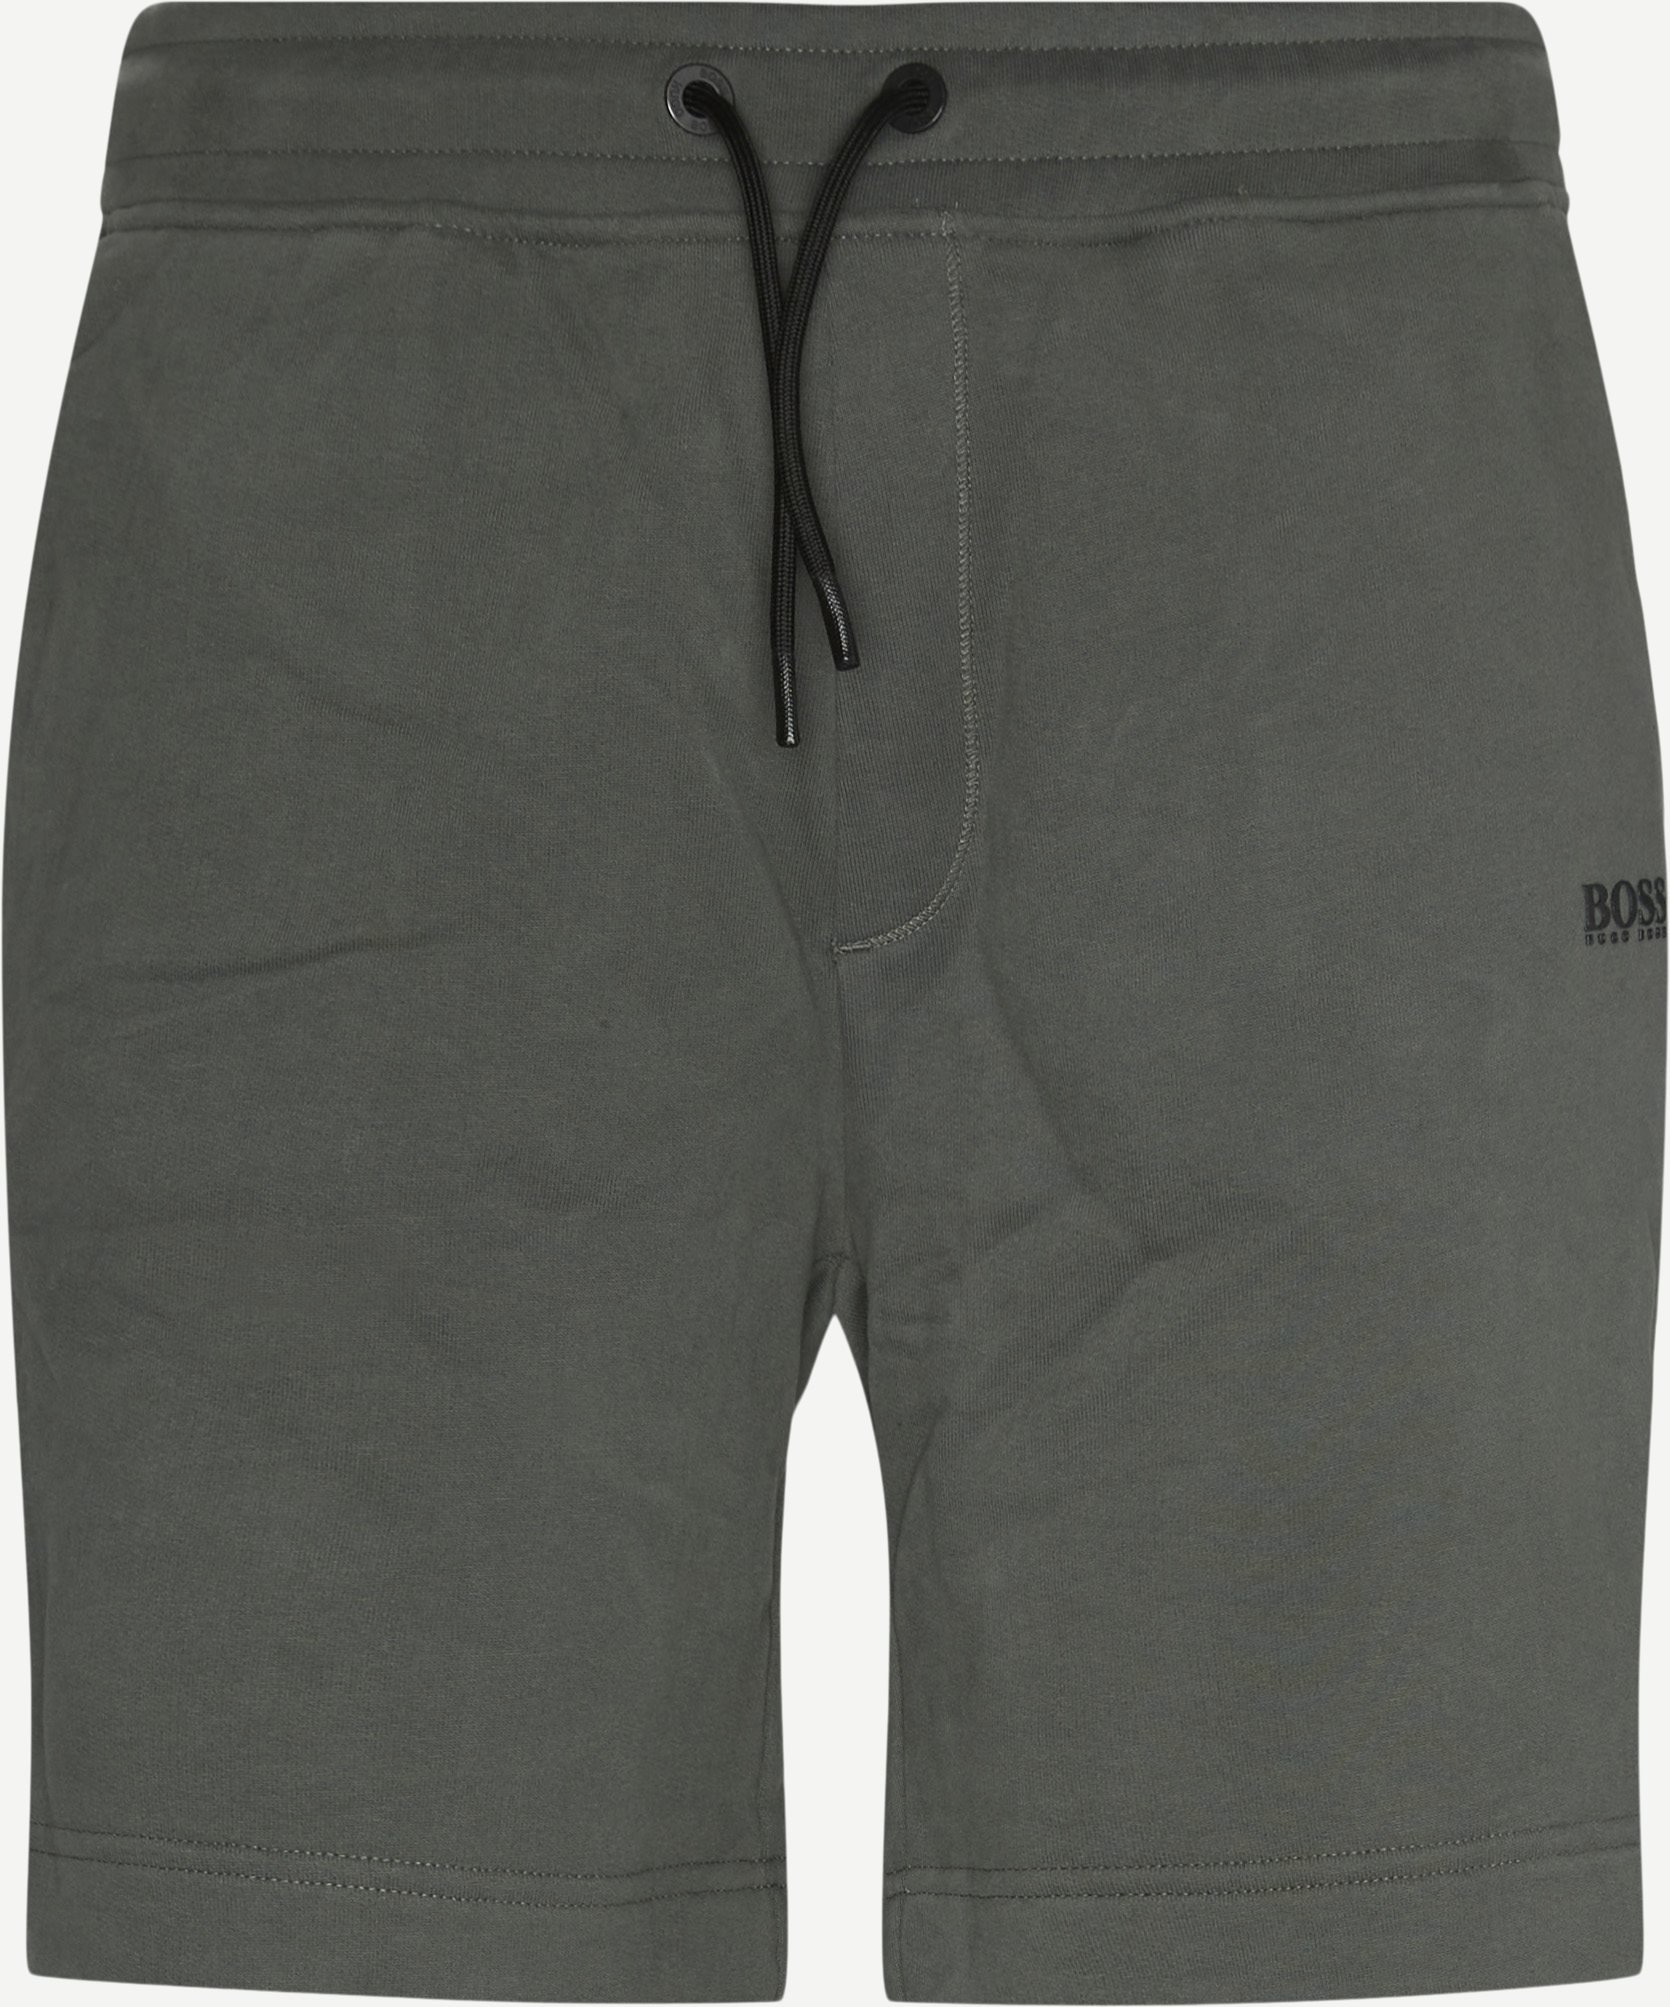 Skeevito sweatshorts - Shorts - Regular fit - Armé